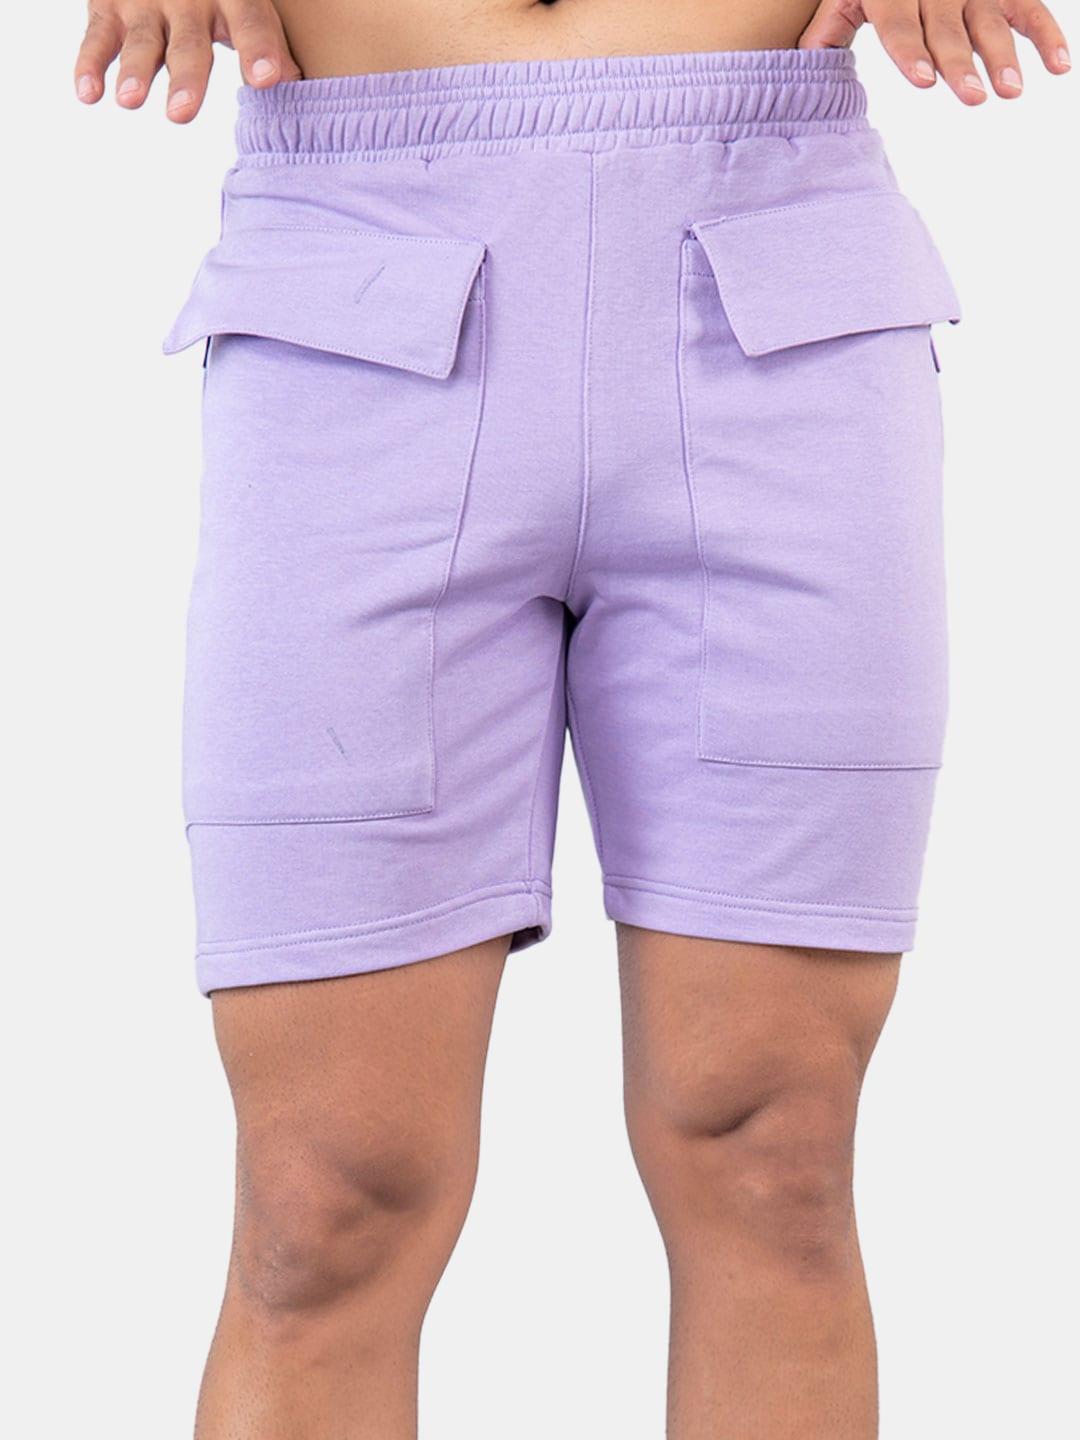 tistabene-men-mid-rise-cotton-shorts